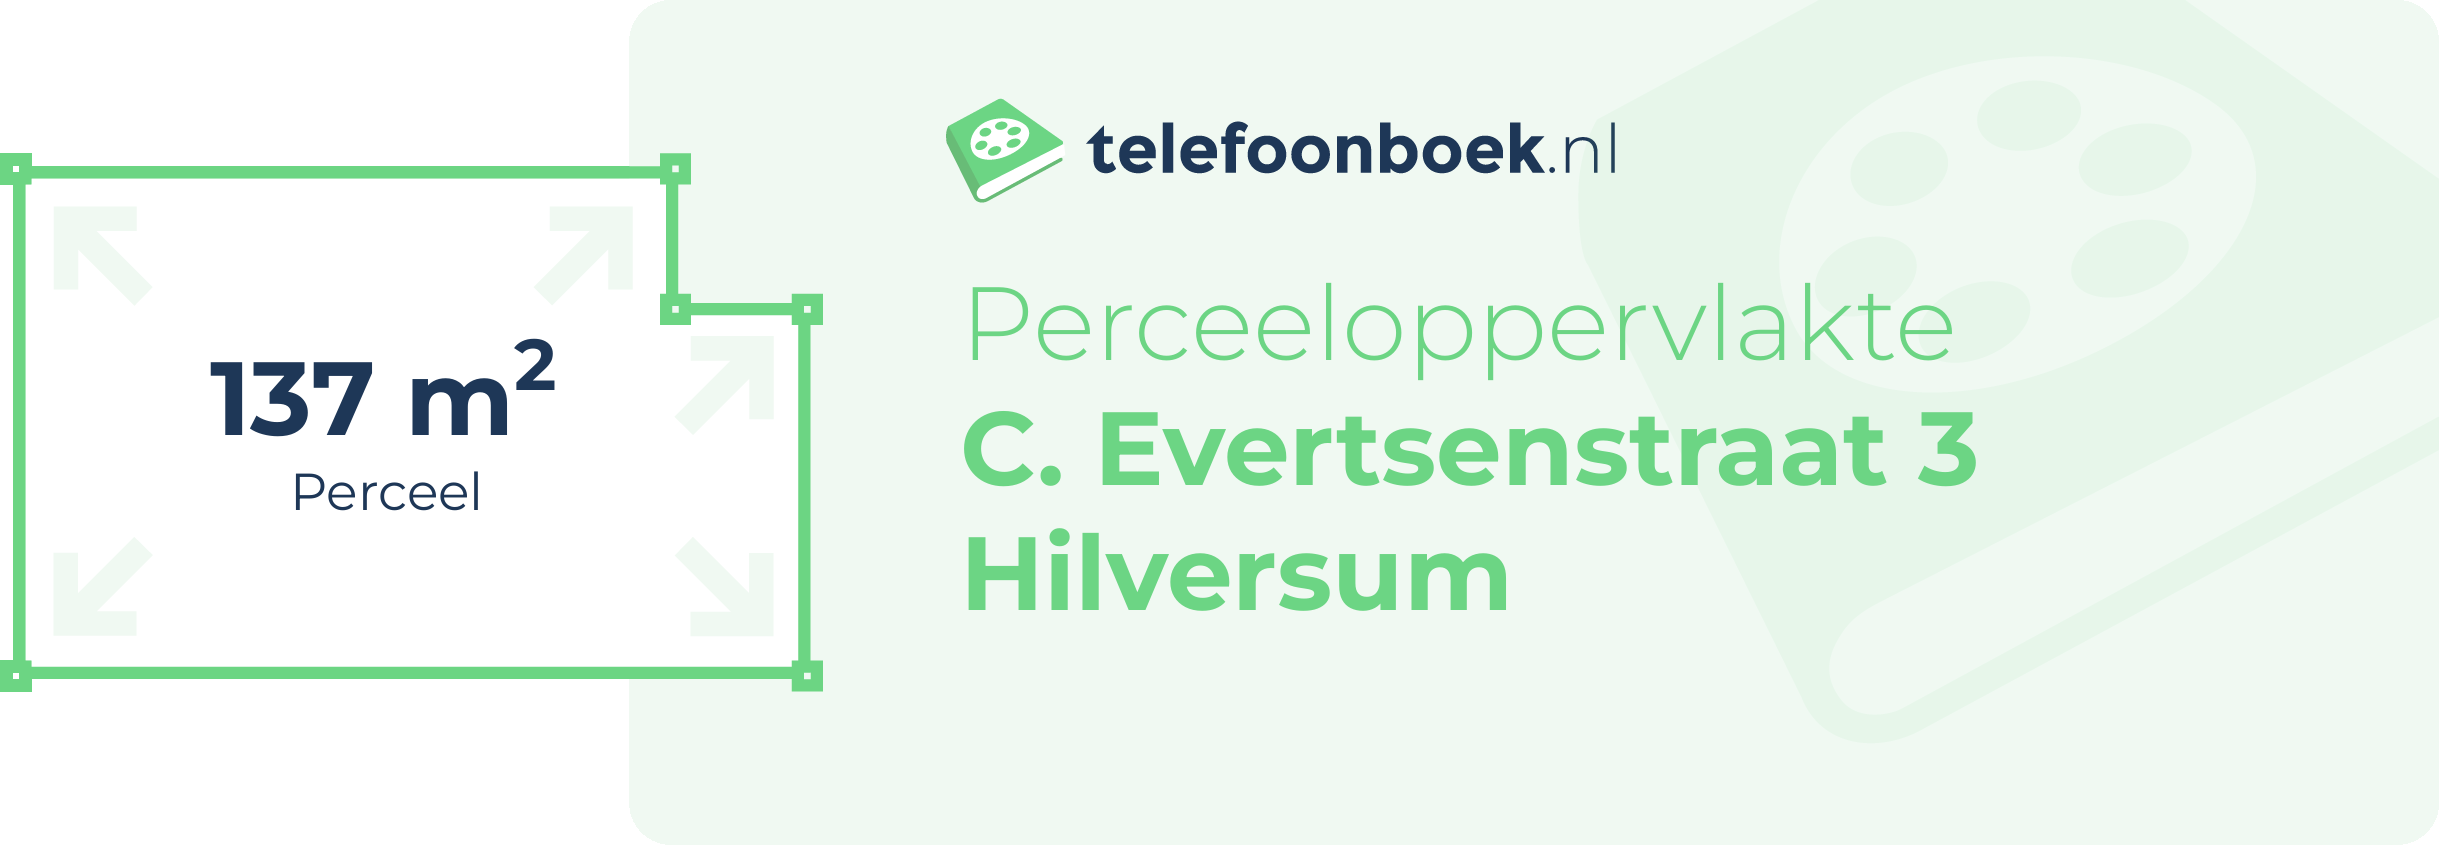 Perceeloppervlakte C. Evertsenstraat 3 Hilversum